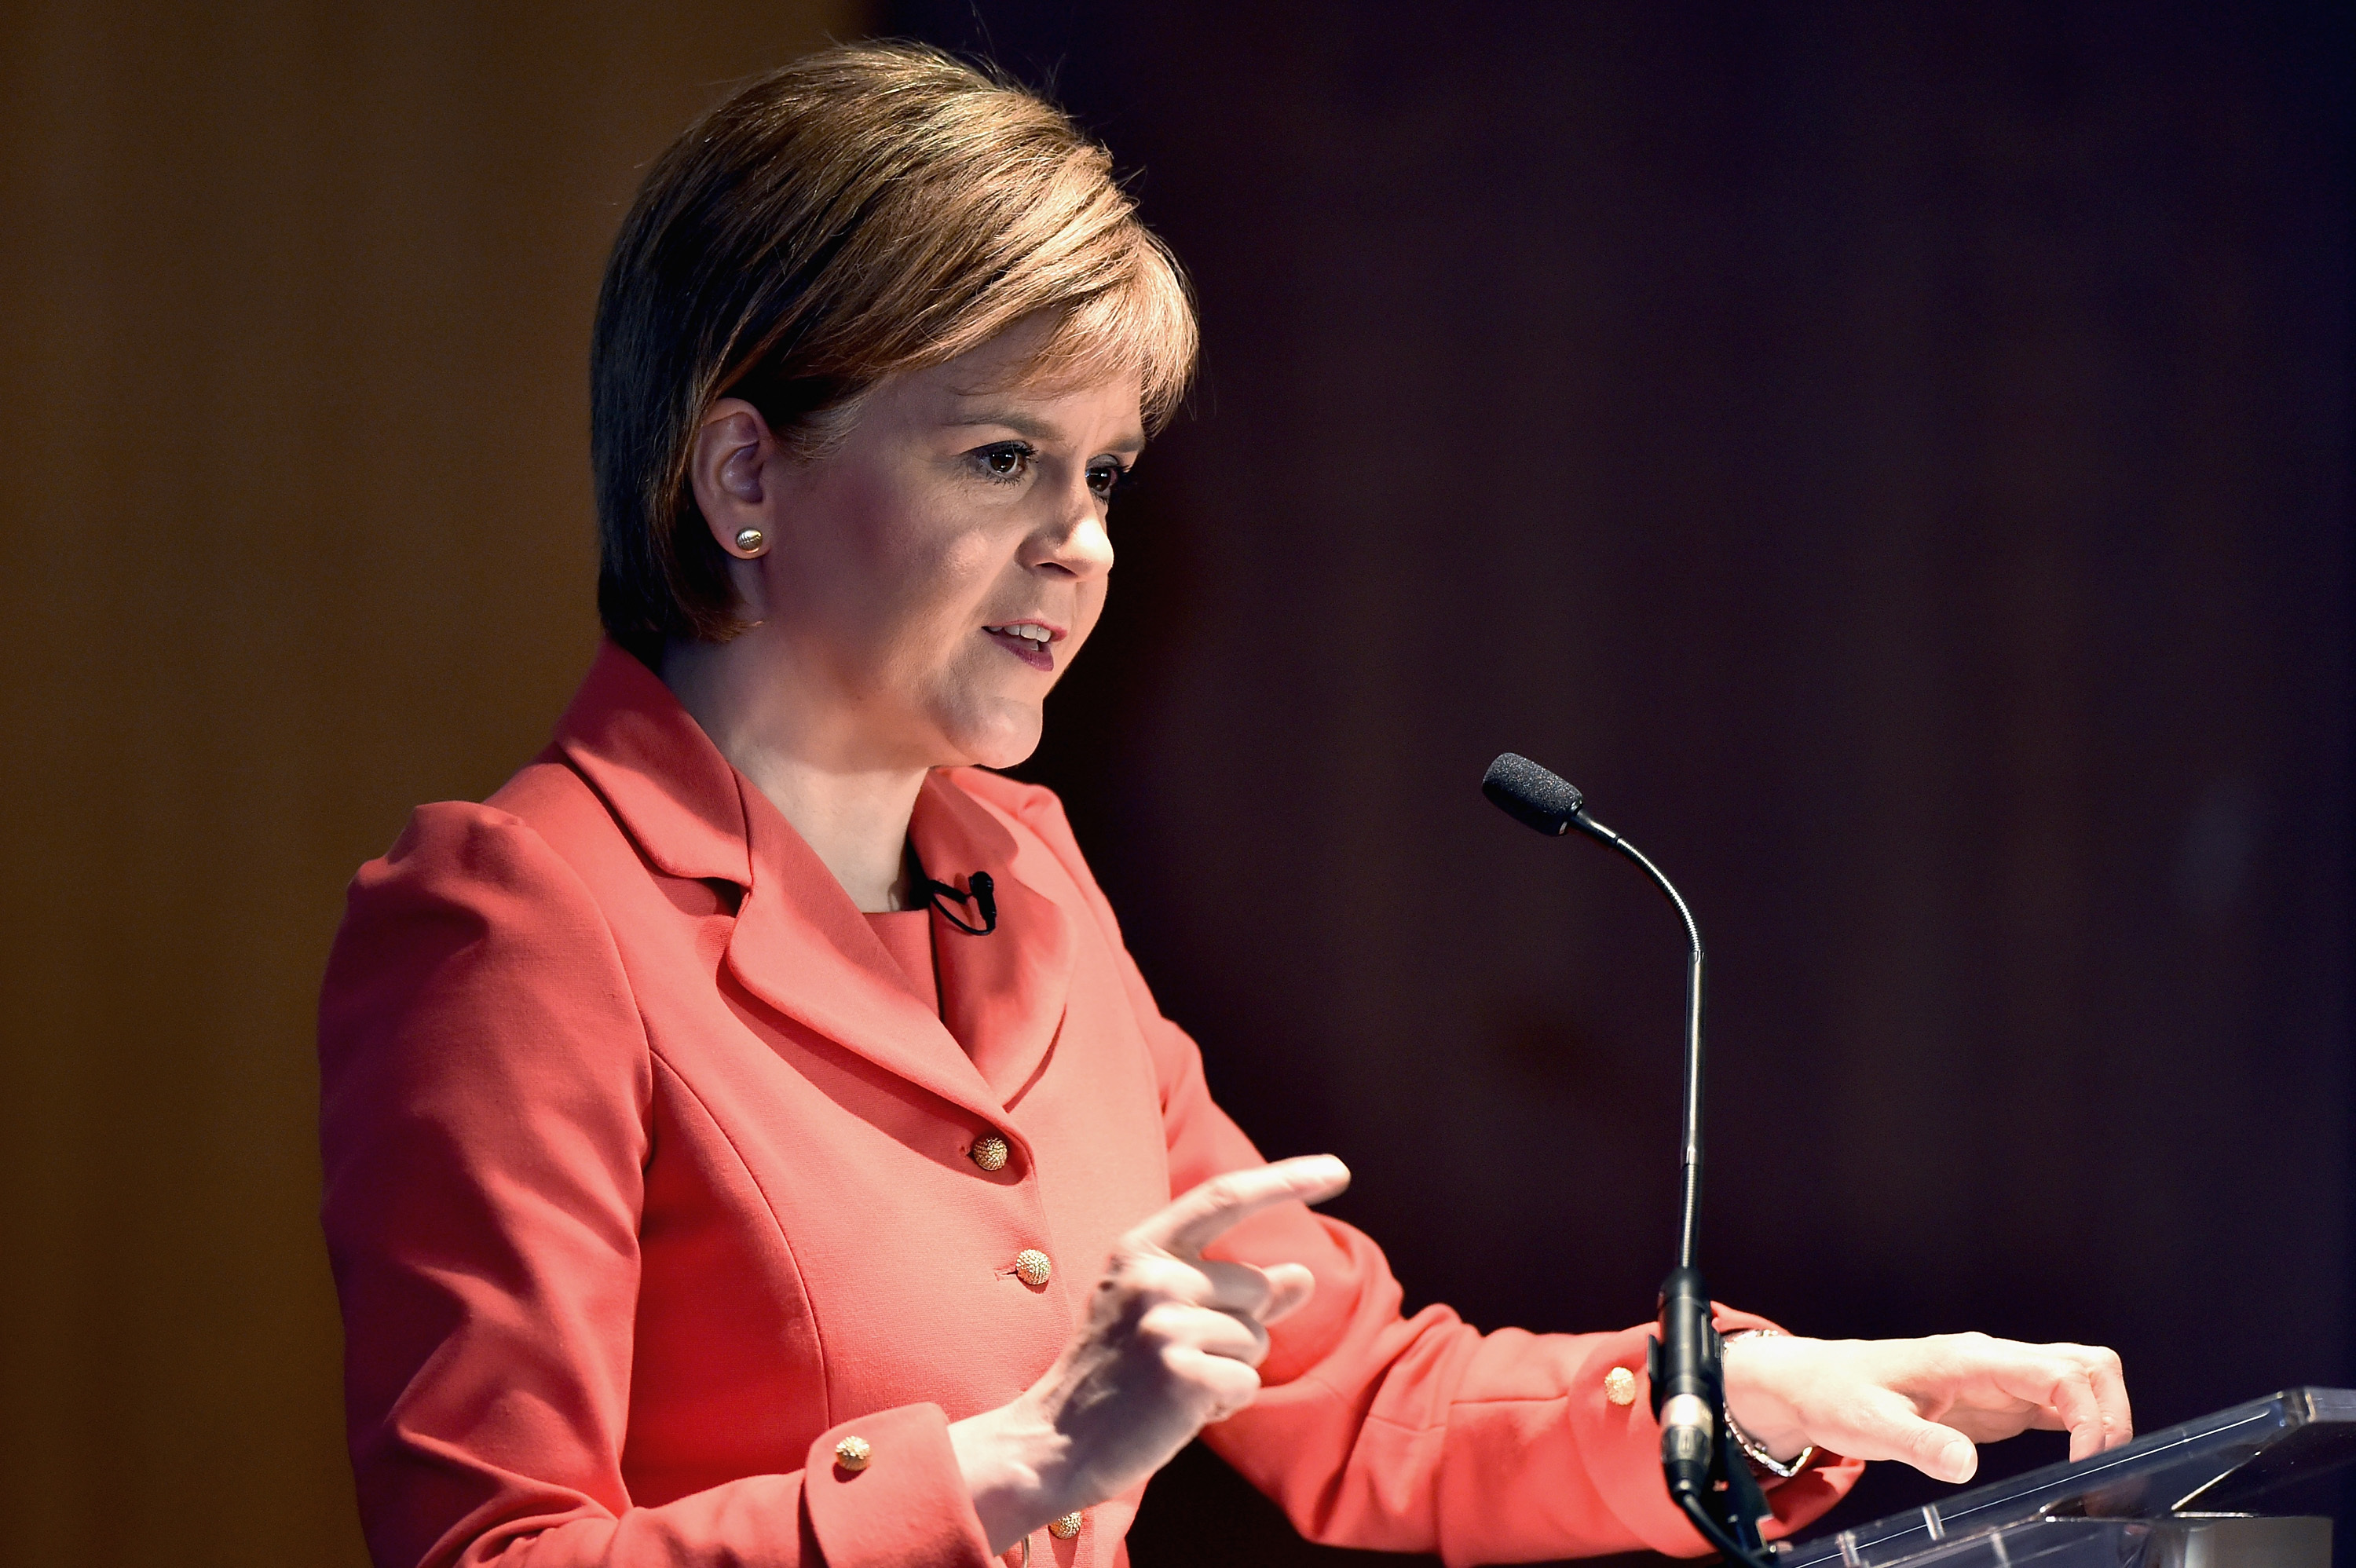 Nicola Sturgeon will speak at the event (Jeff J Mitchell/Getty Images)